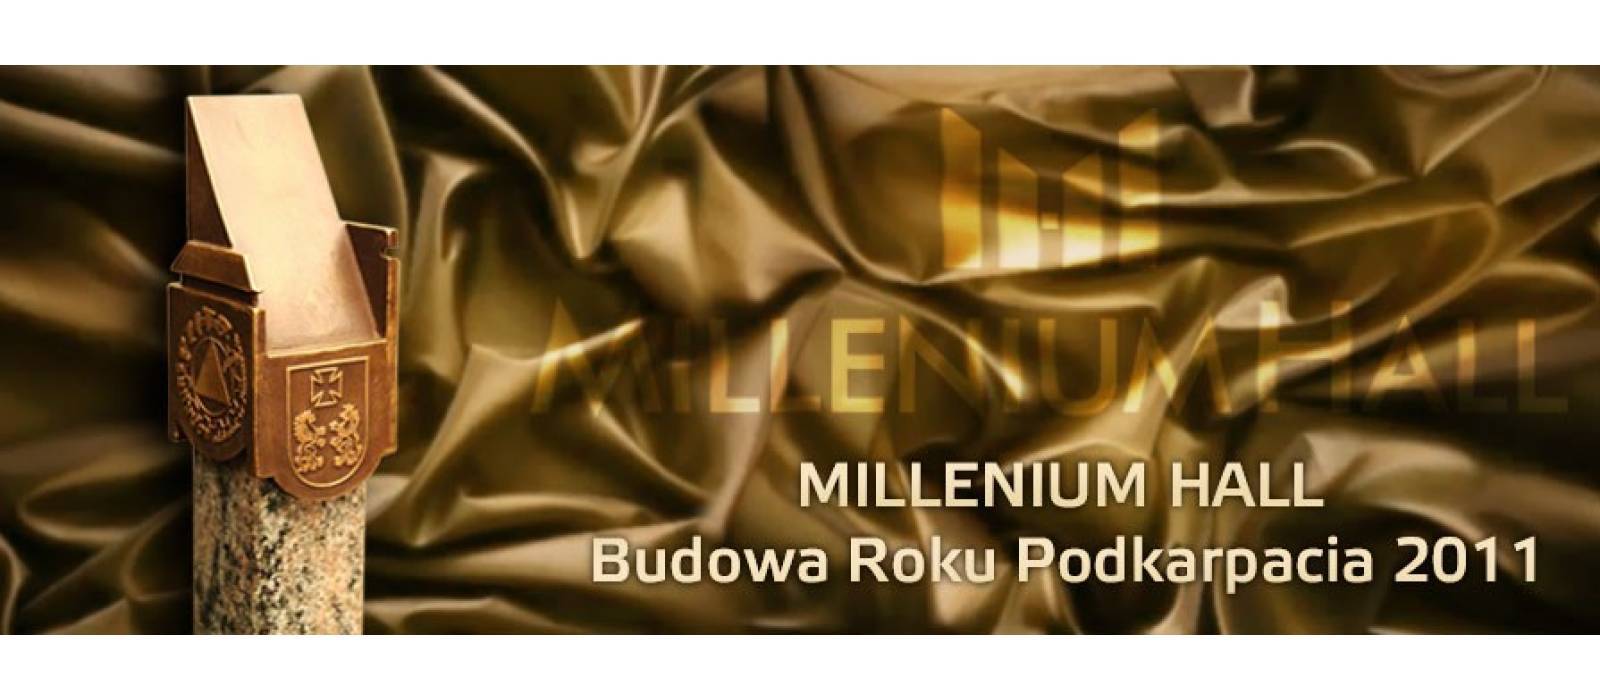 Millenium Hall - Budowa Roku Podkarpacia 2011 - 1